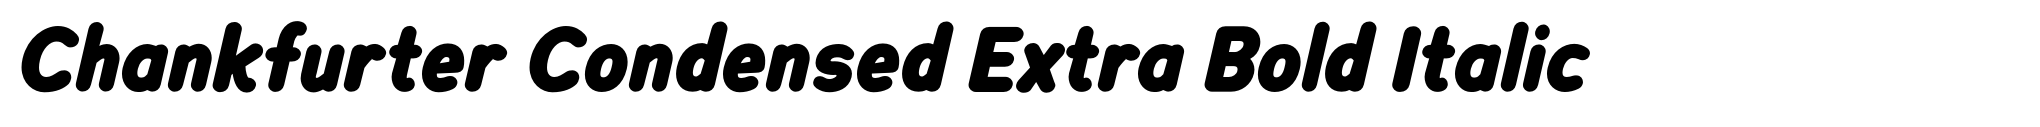 Chankfurter Condensed Extra Bold Italic image